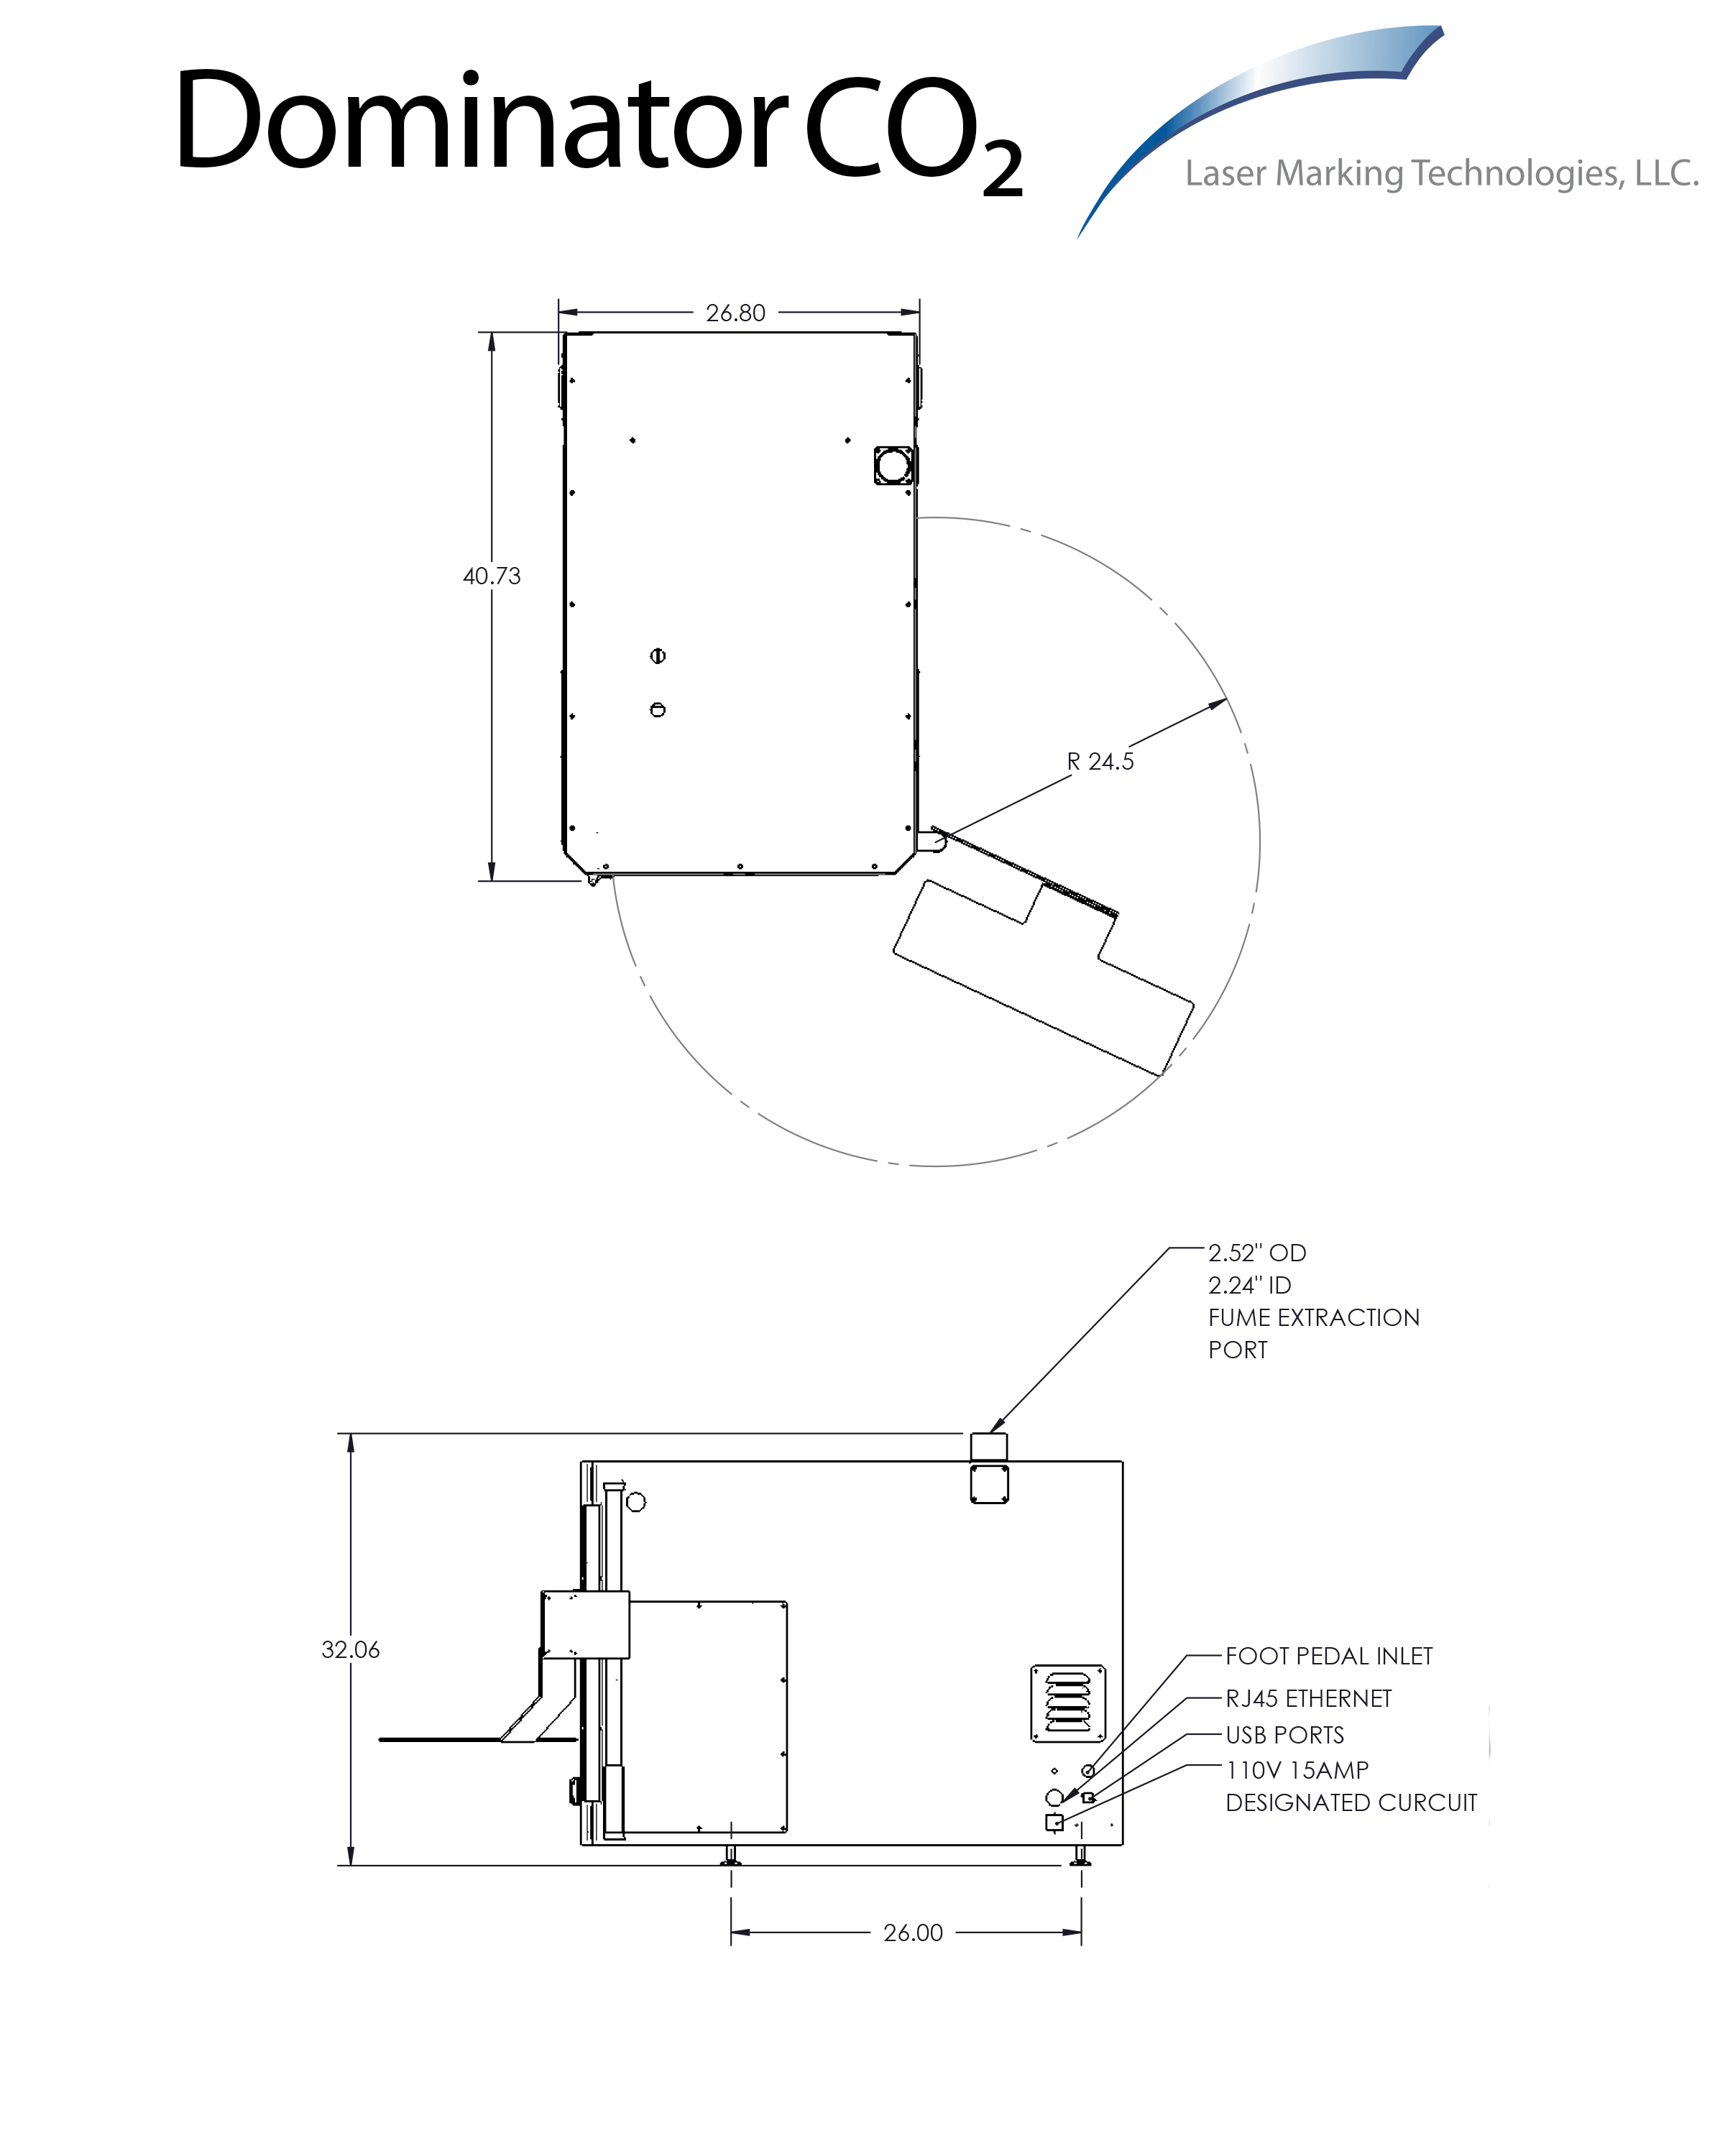 Dominator CO2 laser marking machine diagram and layout